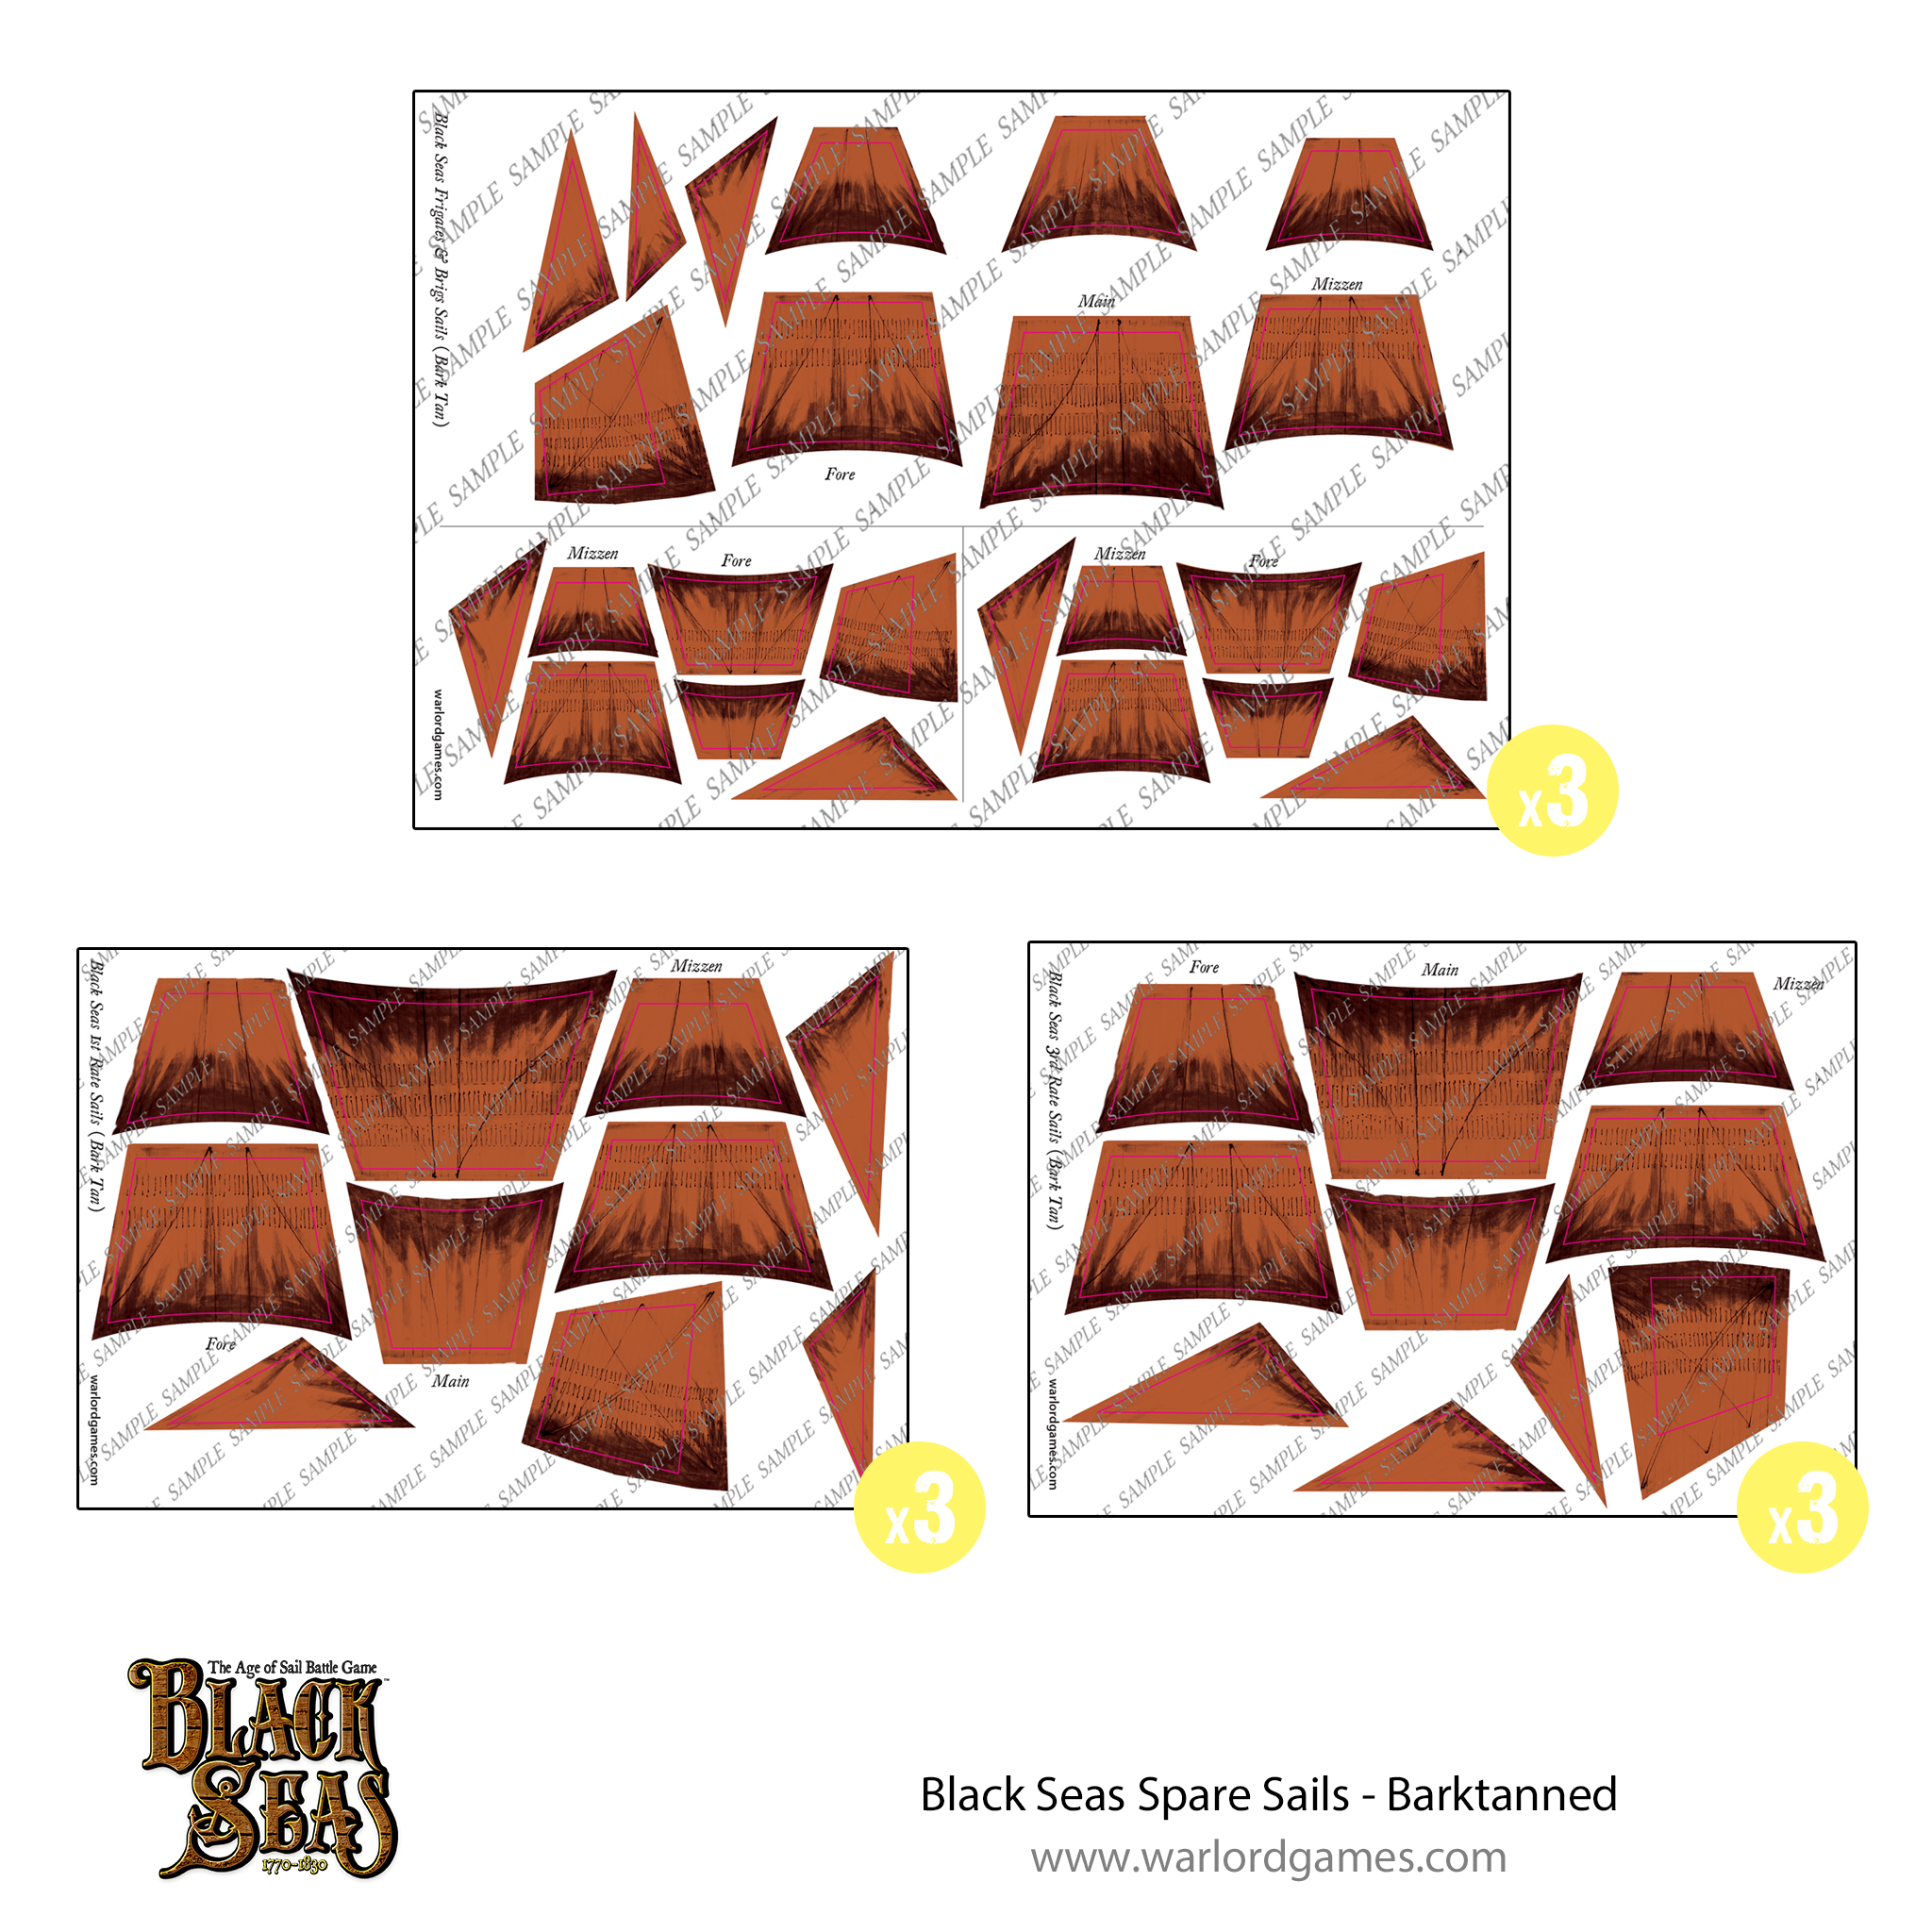 Black Seas Spare sails - barktanned